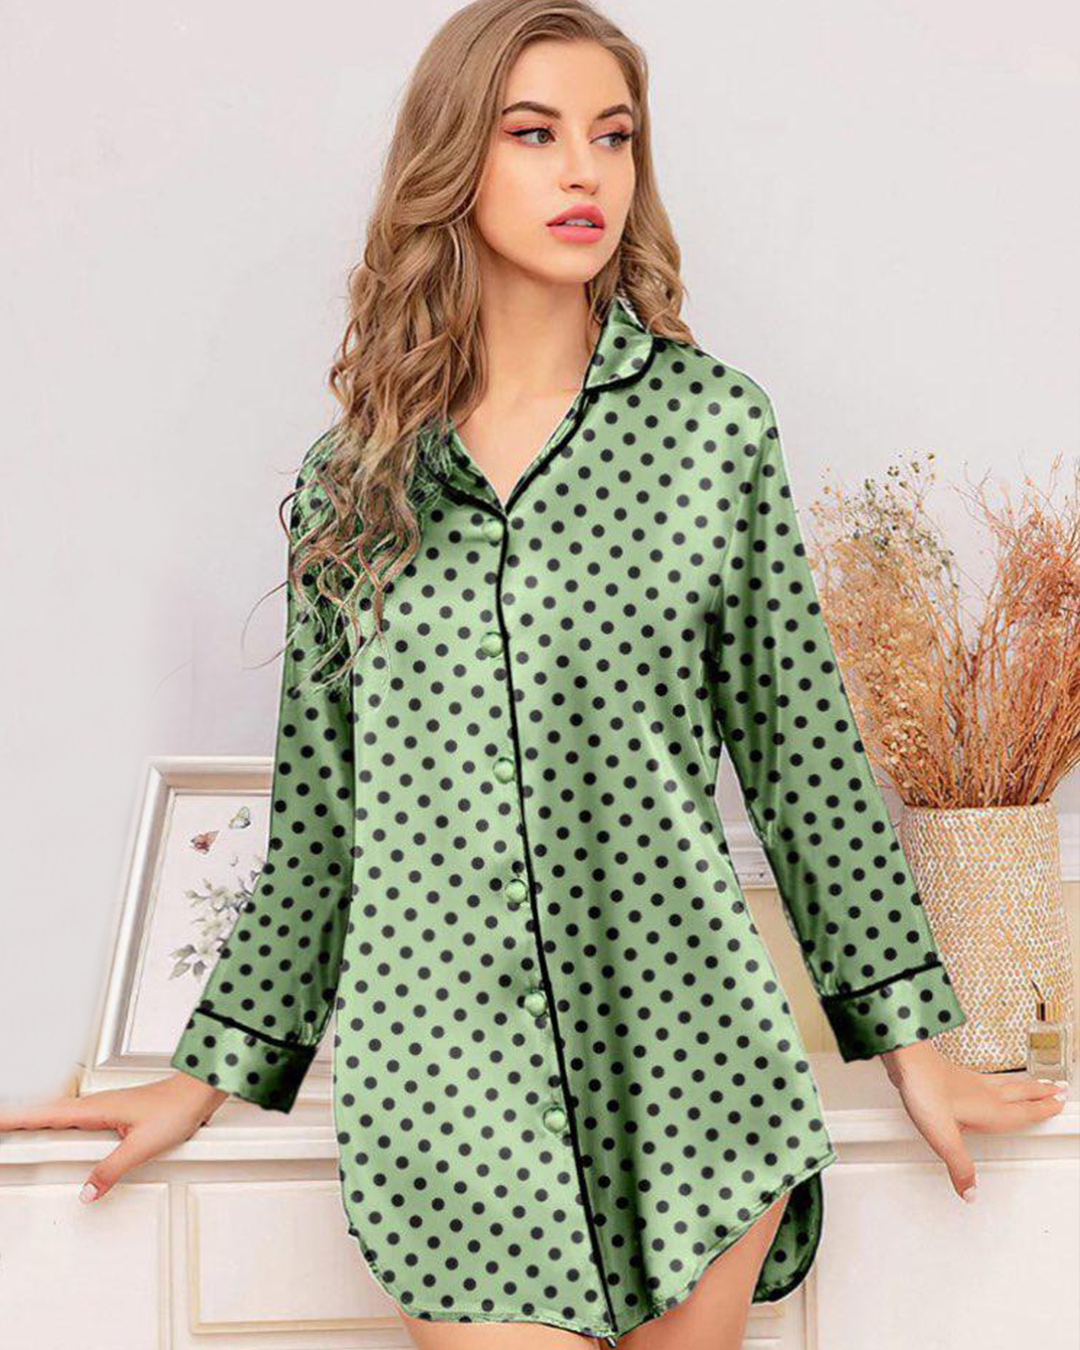 Women's classic short button polka dot shirt